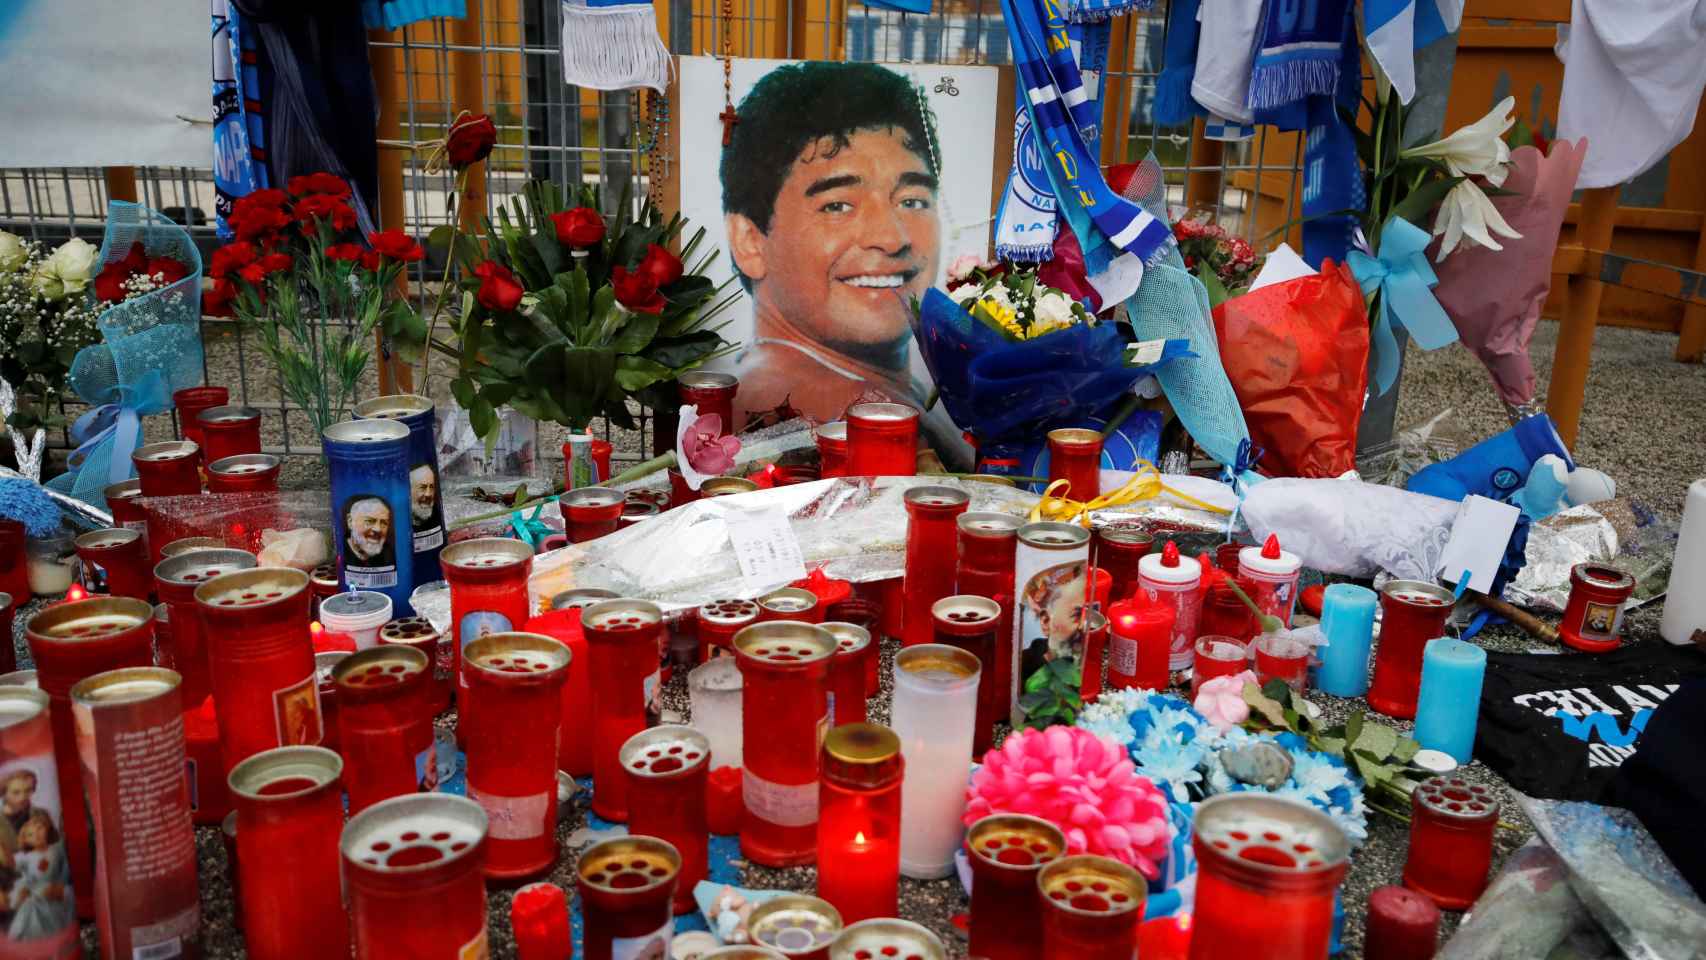 Altar a Maradona repleto de velas y homenajes